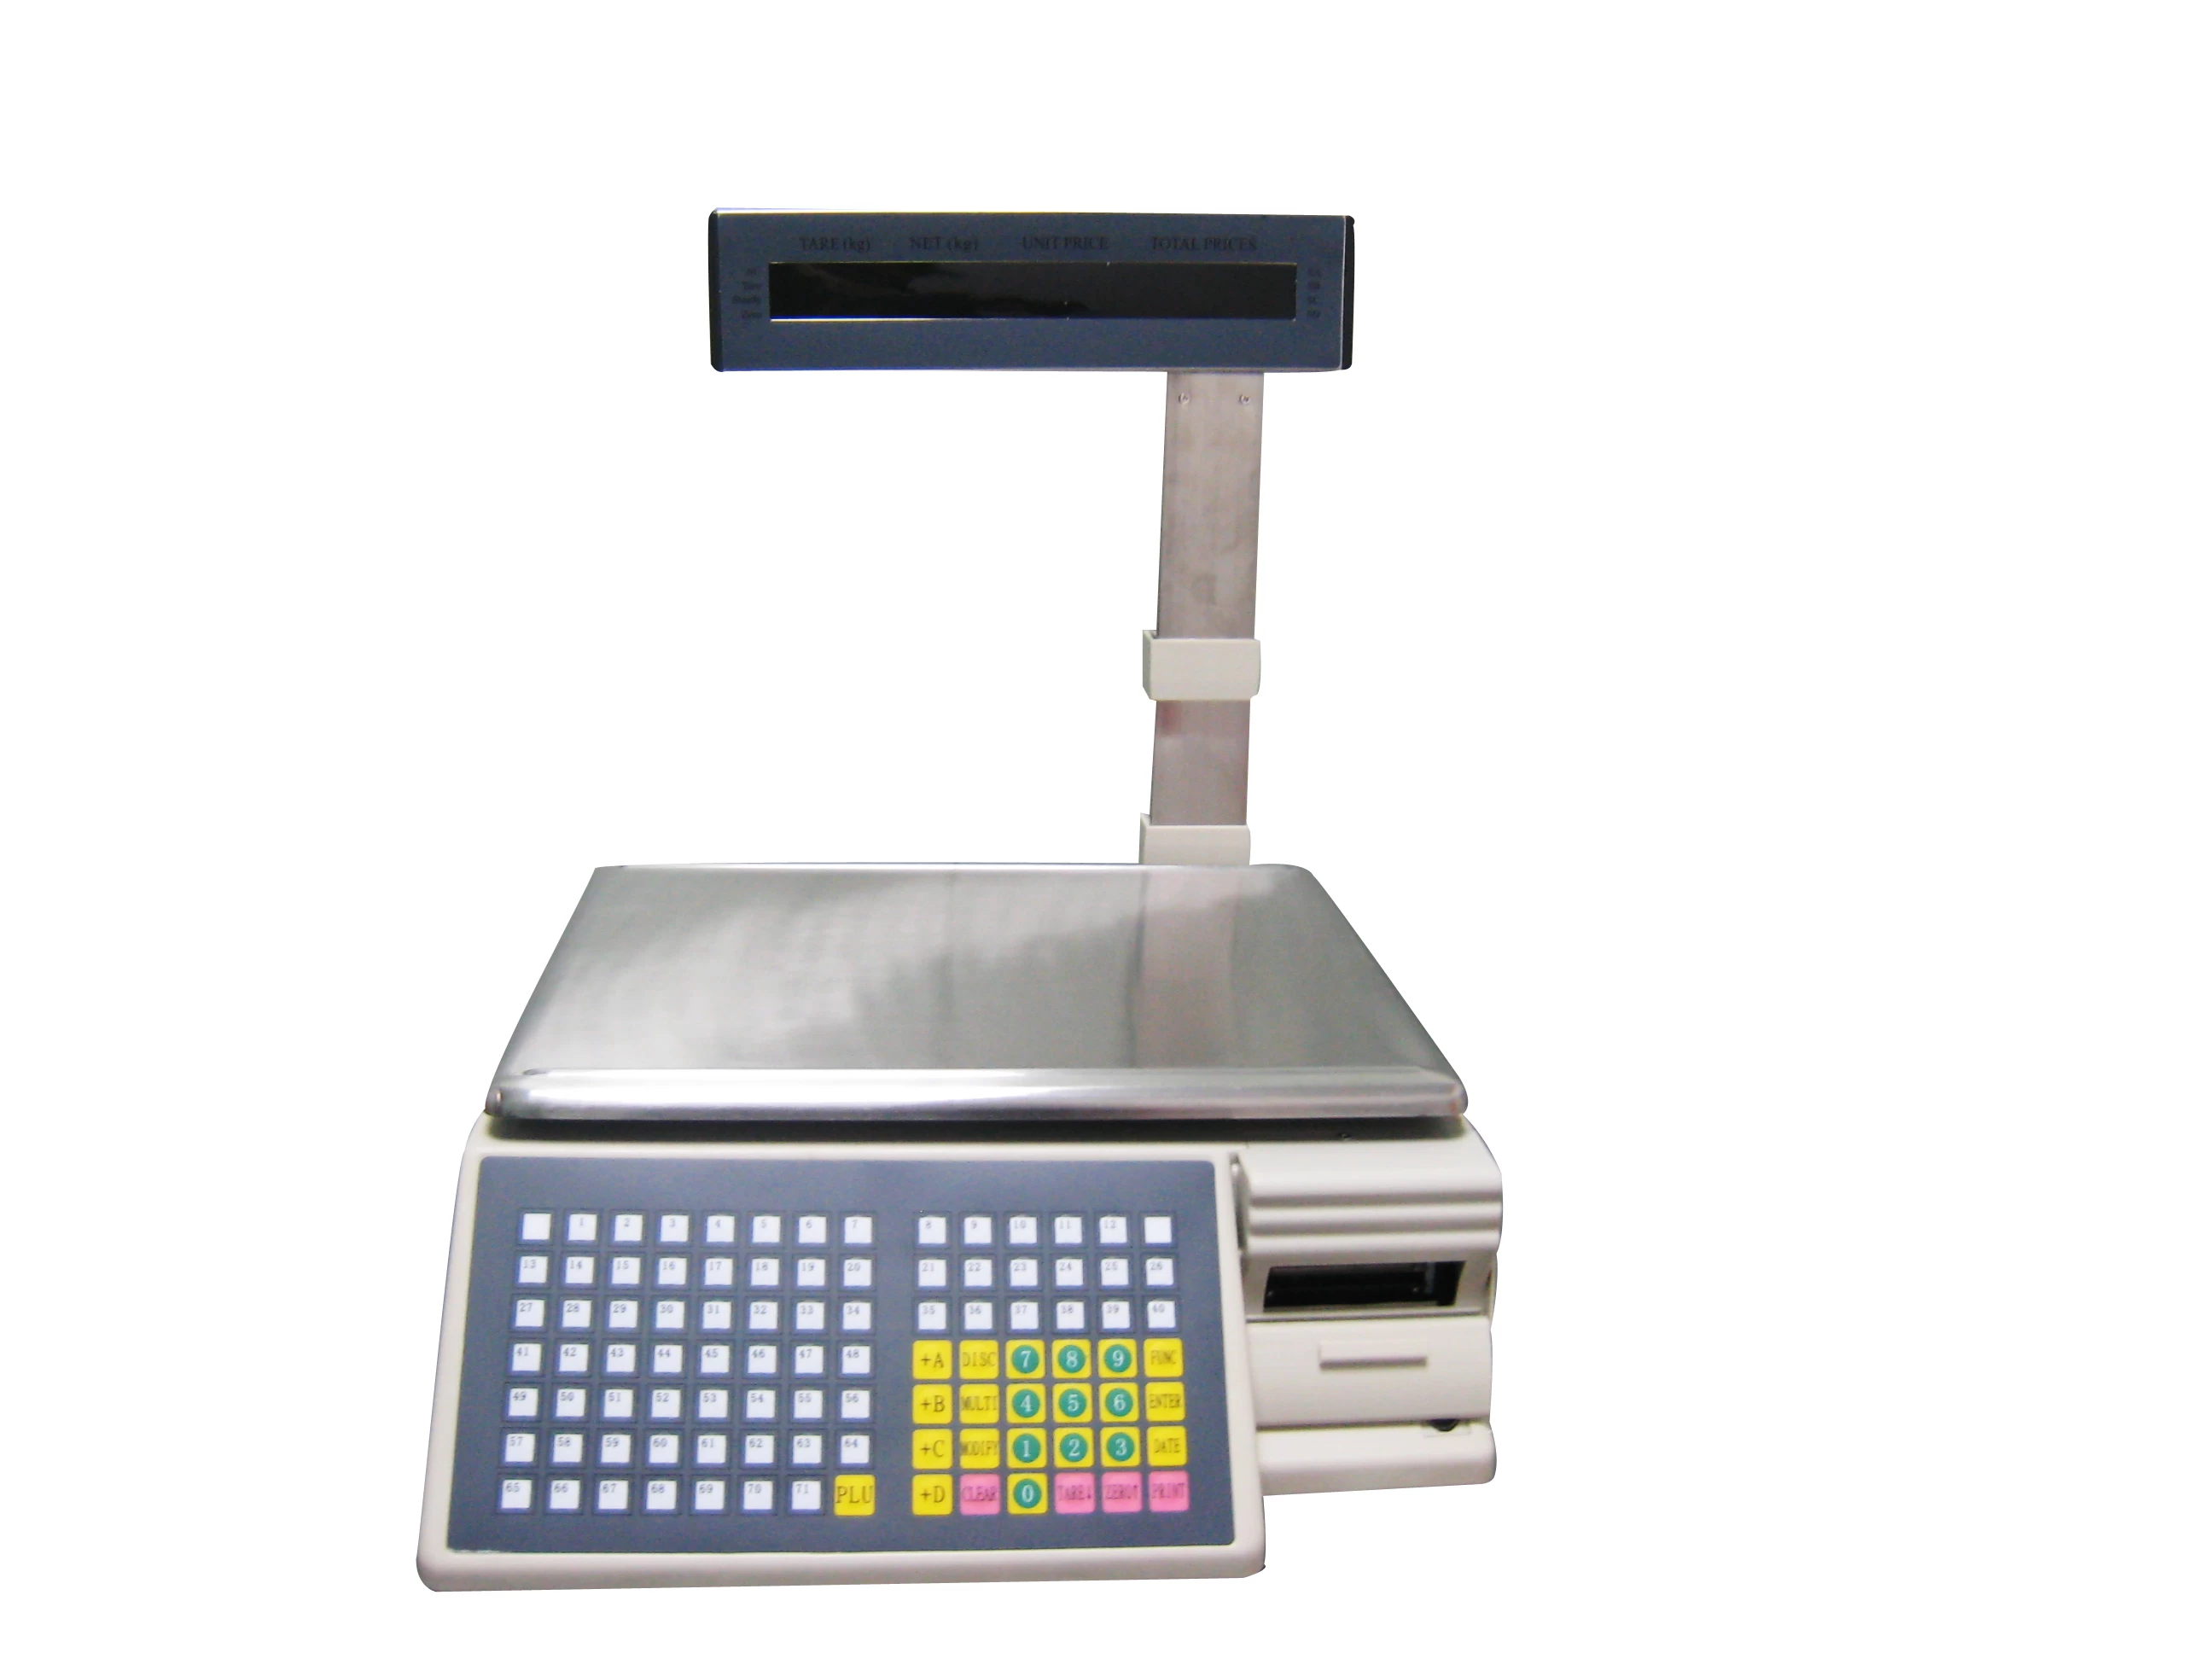 Platform weighing digital scale with price printing